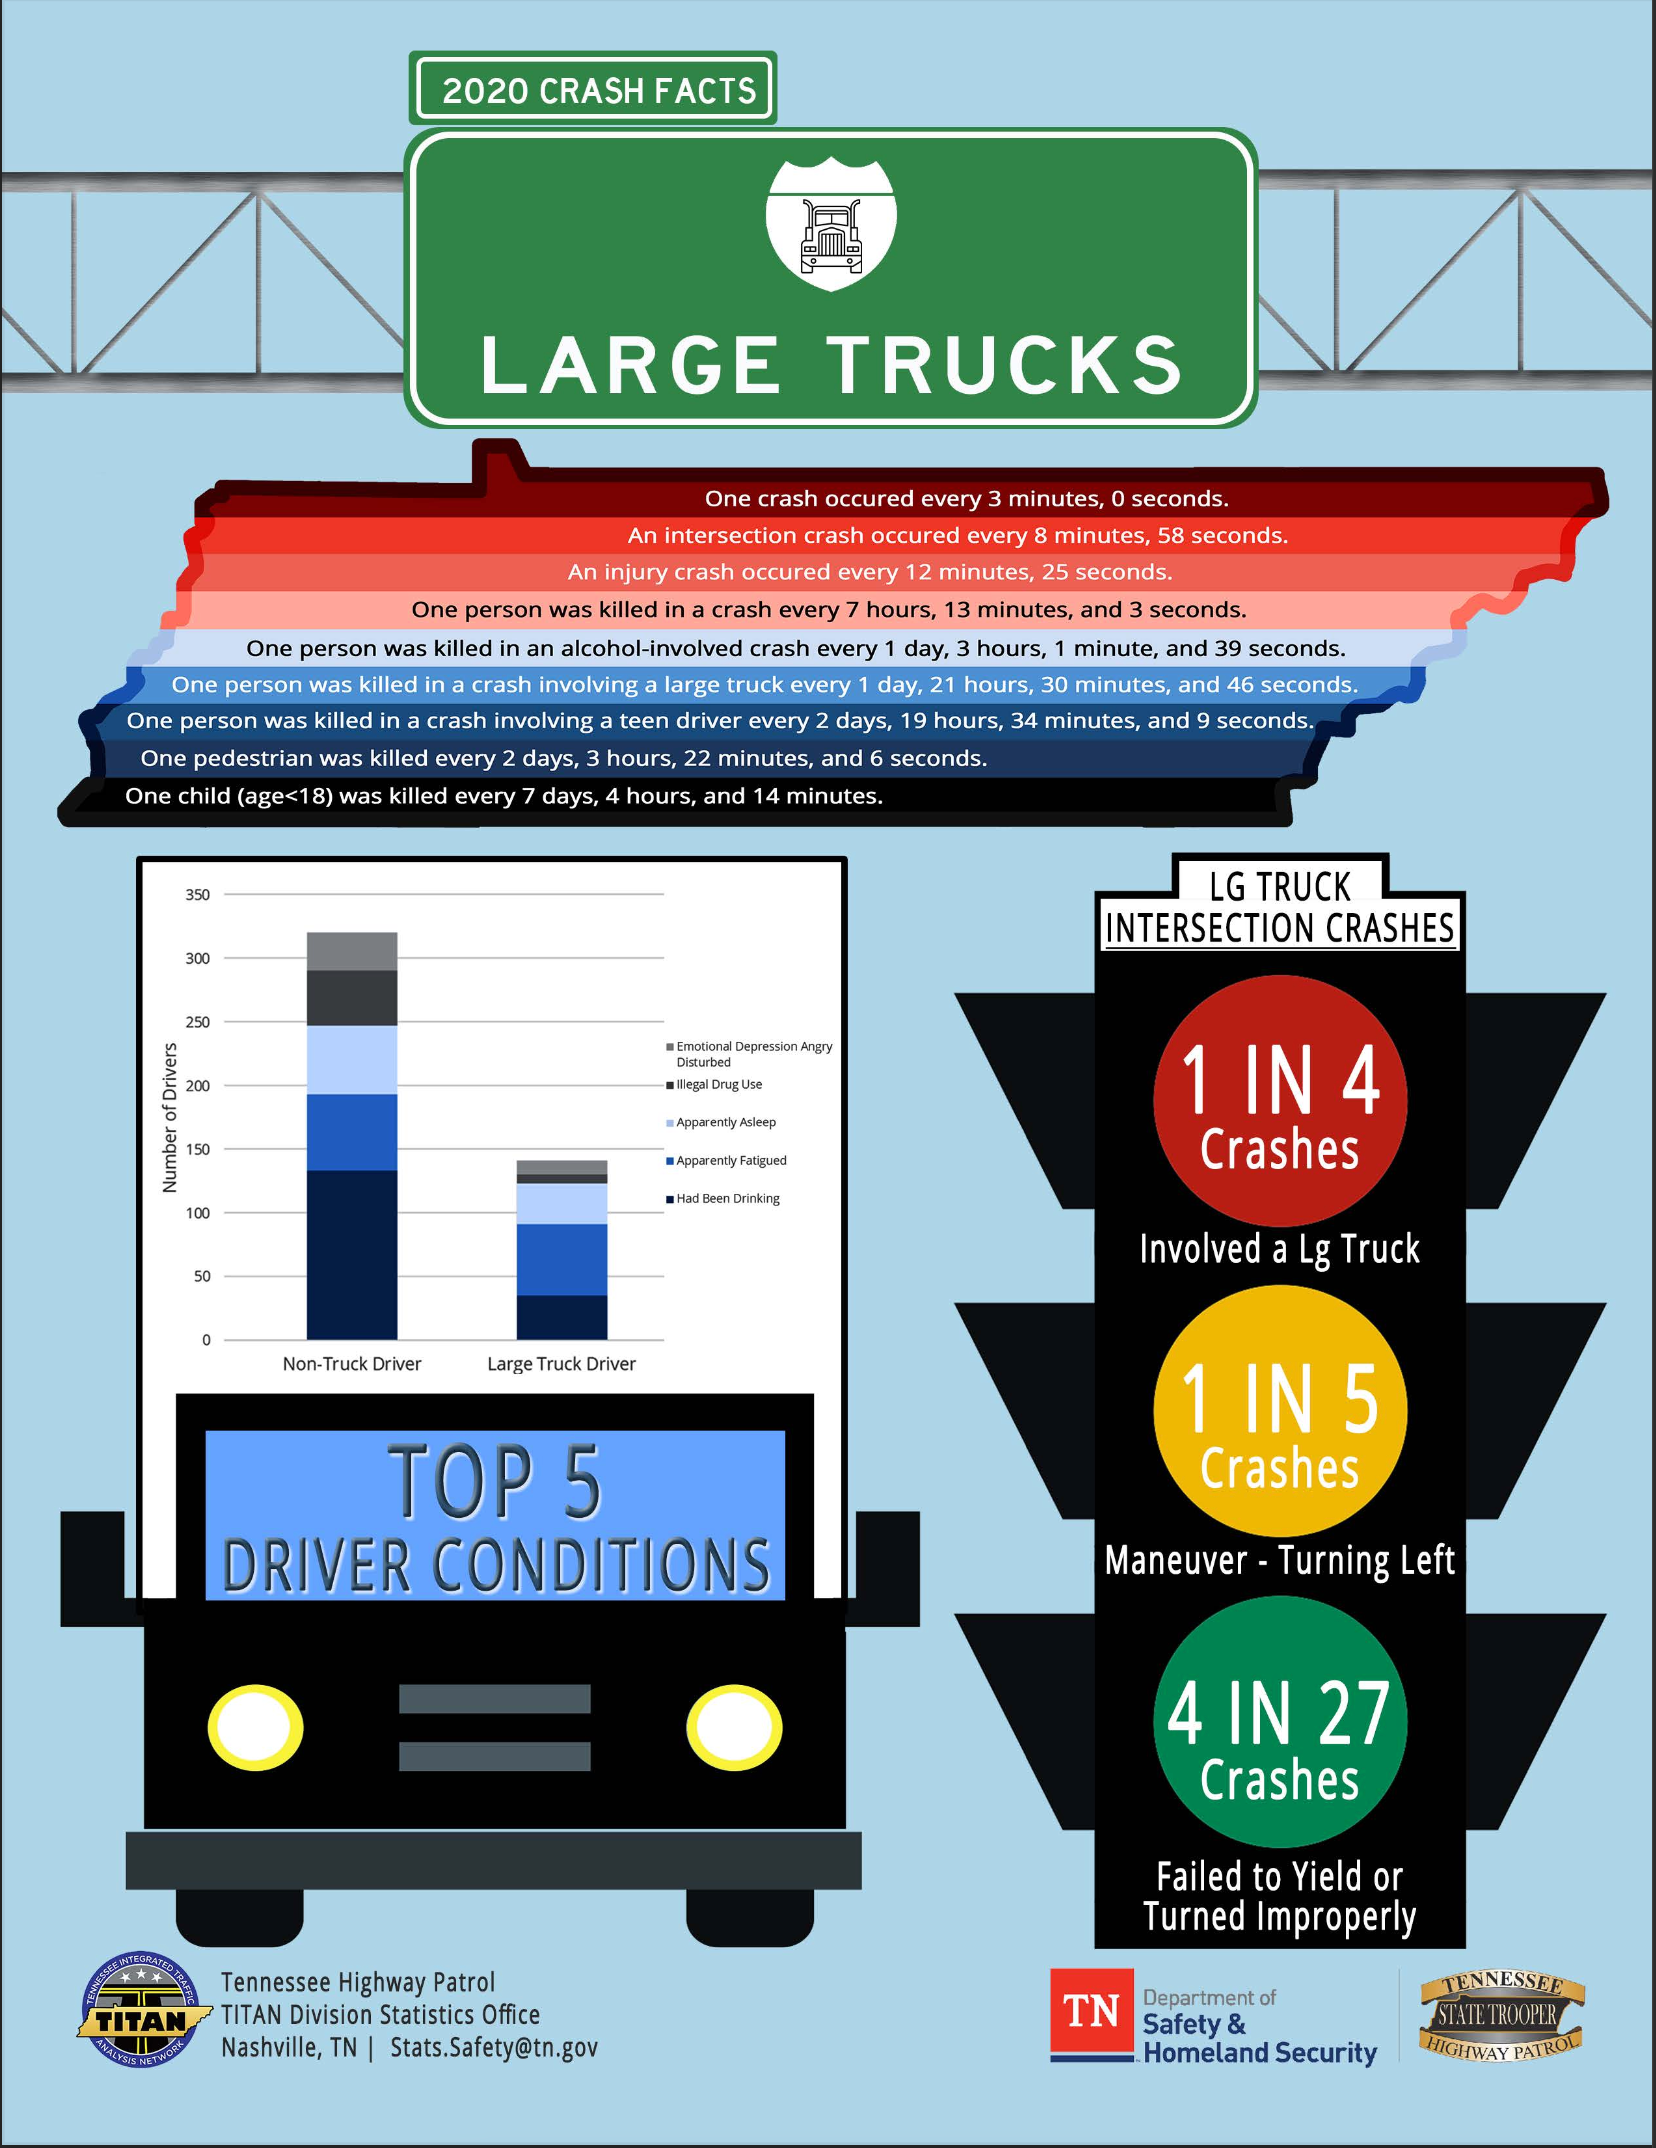 Tennessee 2020 Large Truck Crash Statistics - The Dangers of Large Trucks on Nashville Roads